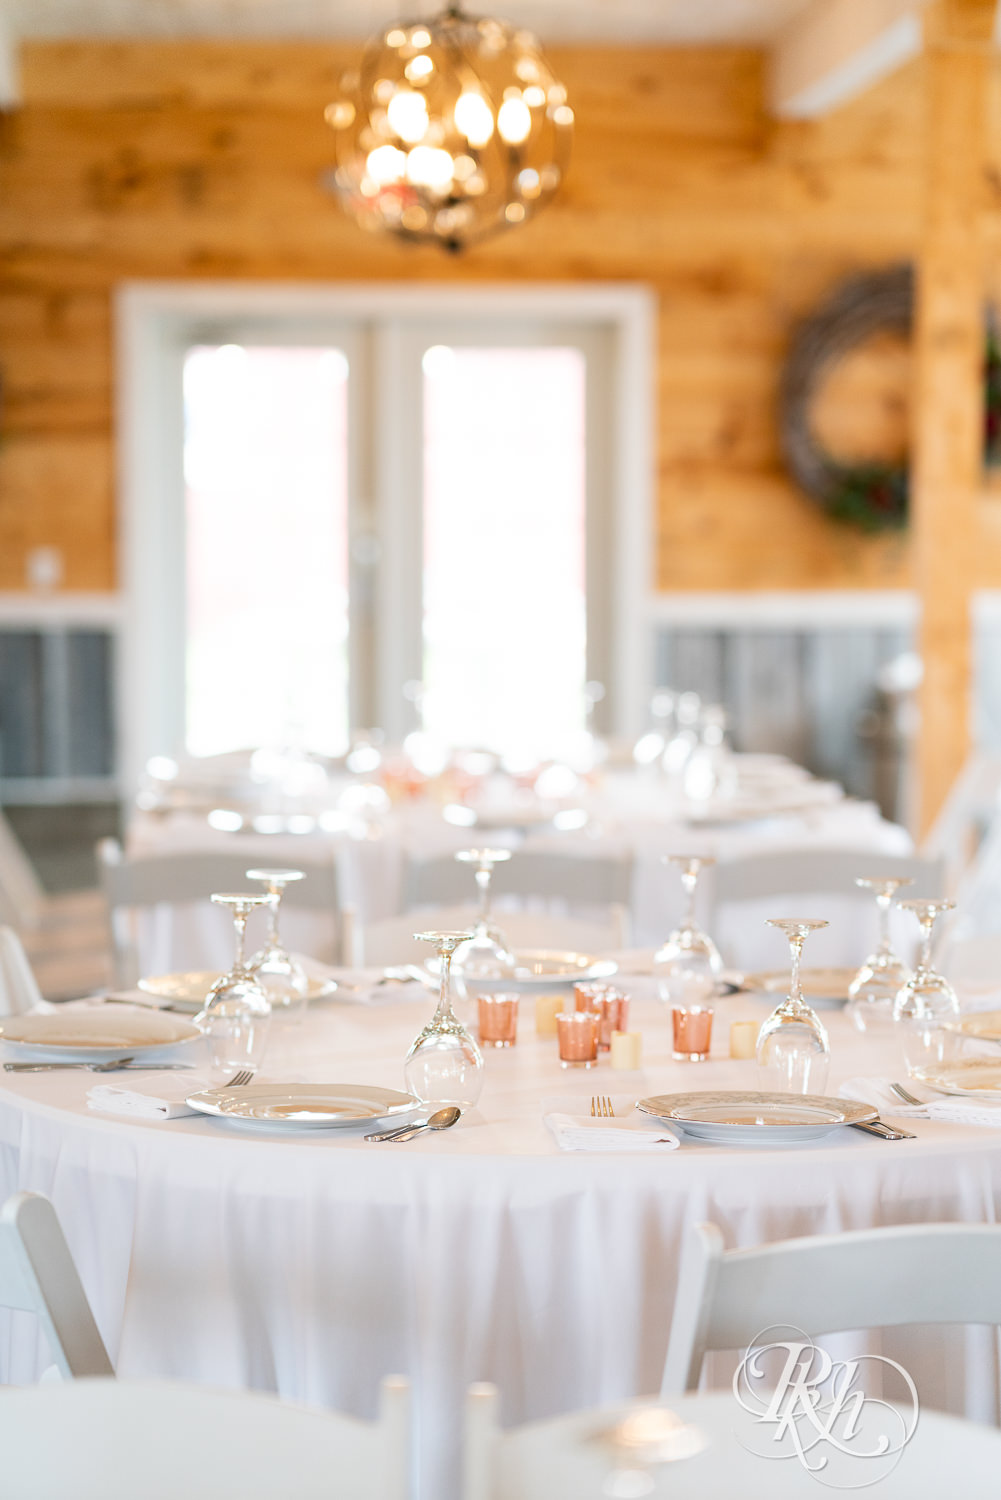 Indoor barn wedding reception setup at Barn at Mirror Lake in Mondovi, Wisconsin.